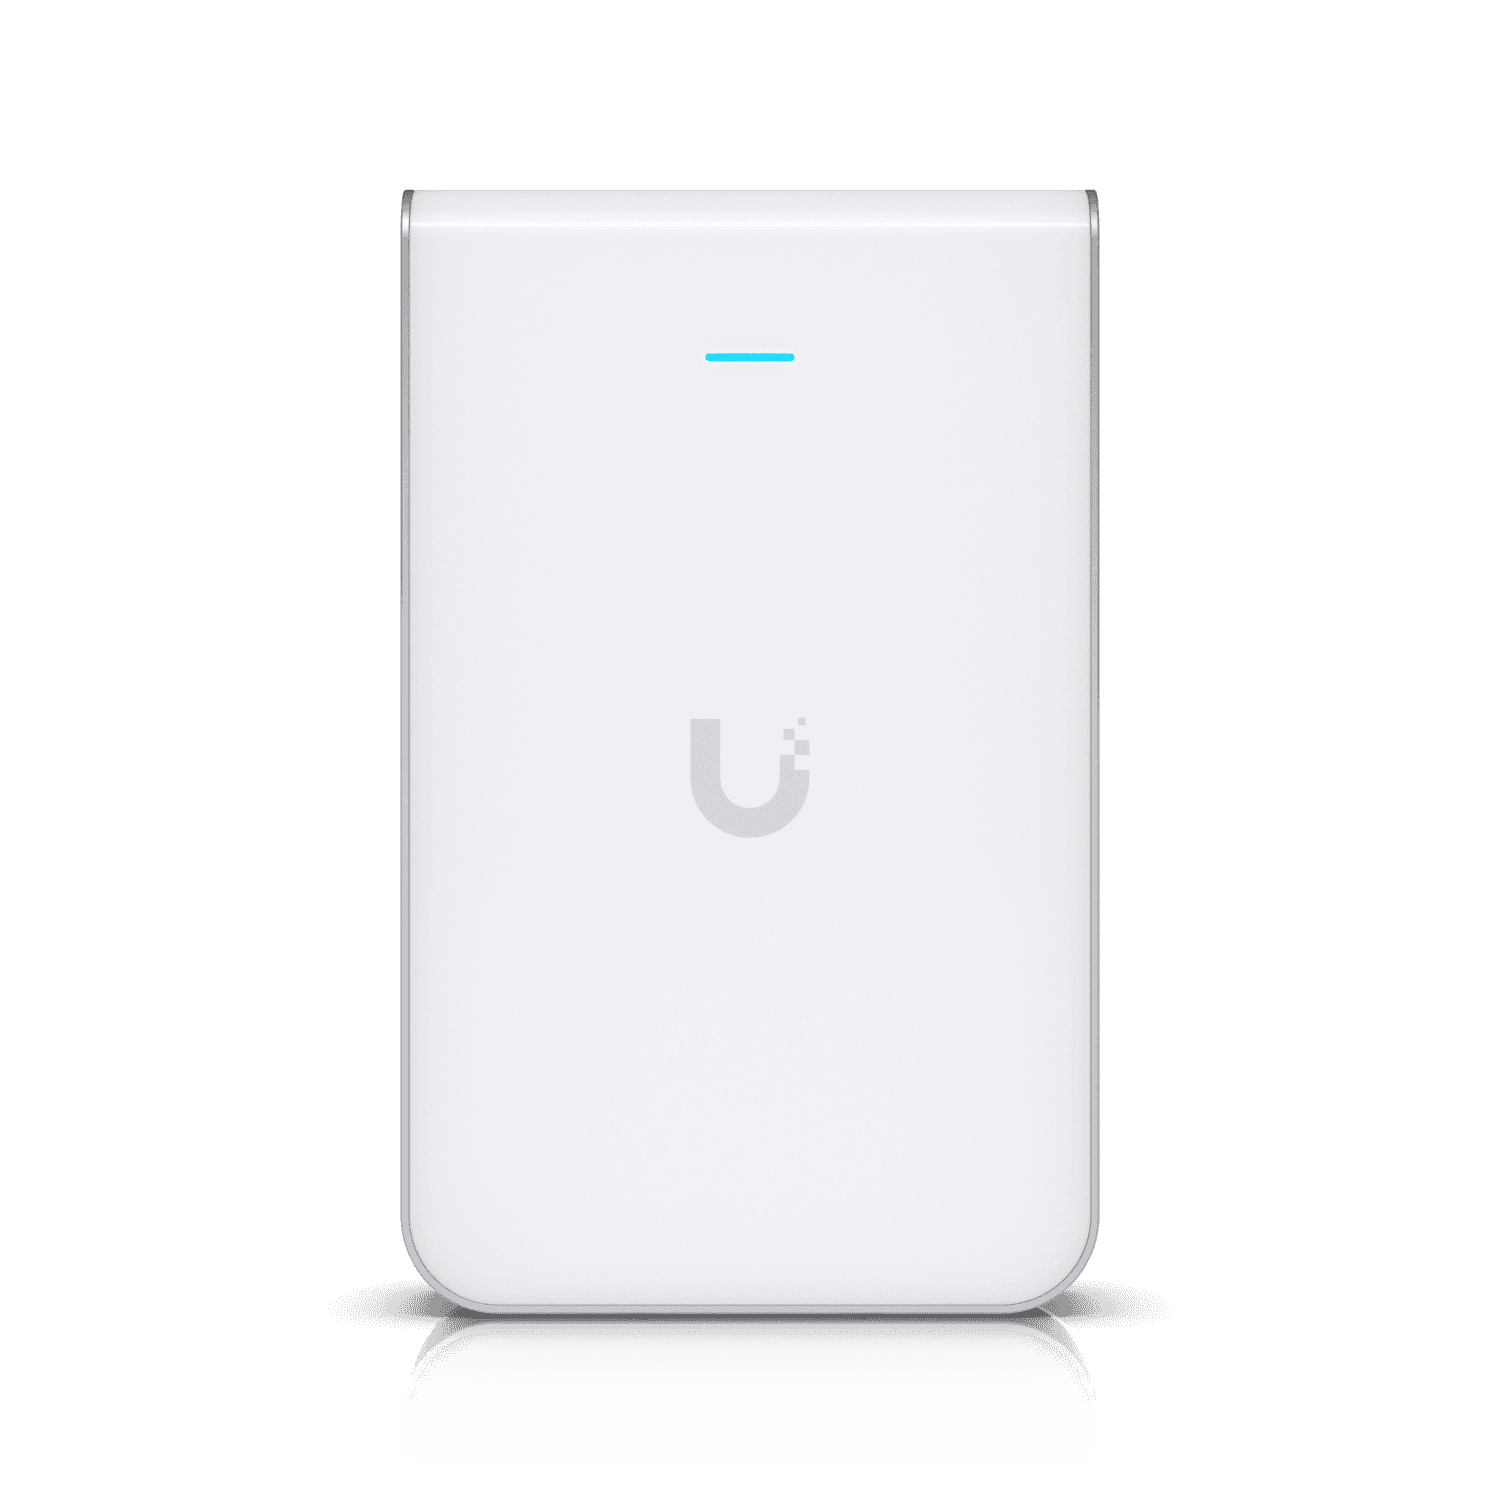 Access Point WiFi 6 Lite - Ubiquiti Store United States